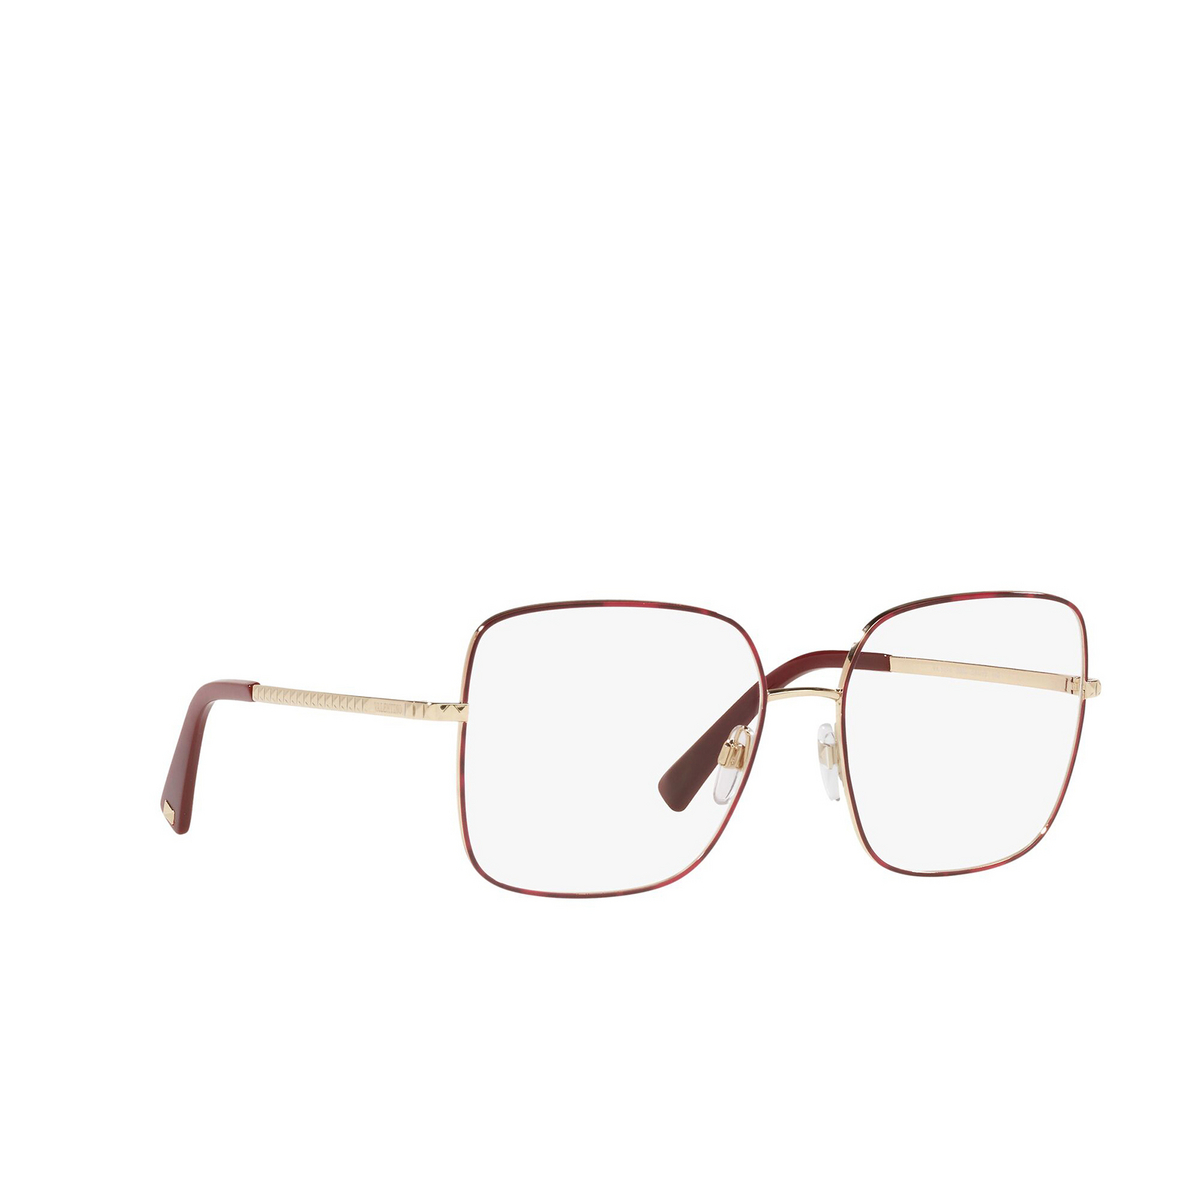 Valentino® Square Sunglasses: VA1024 color Red Havana / Light Gold 3068 - three-quarters view.